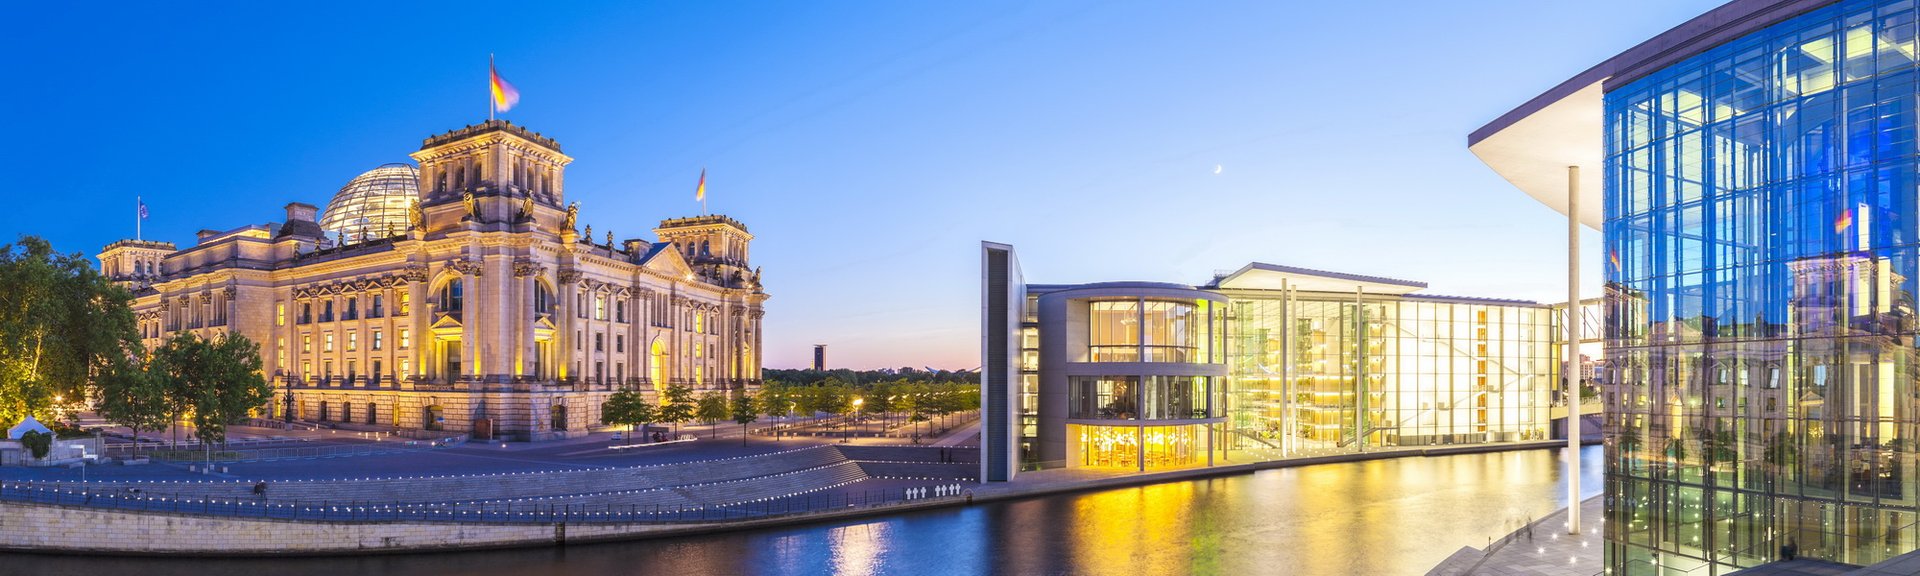 Berlim em detalhe – Berlim-Mitte num relance